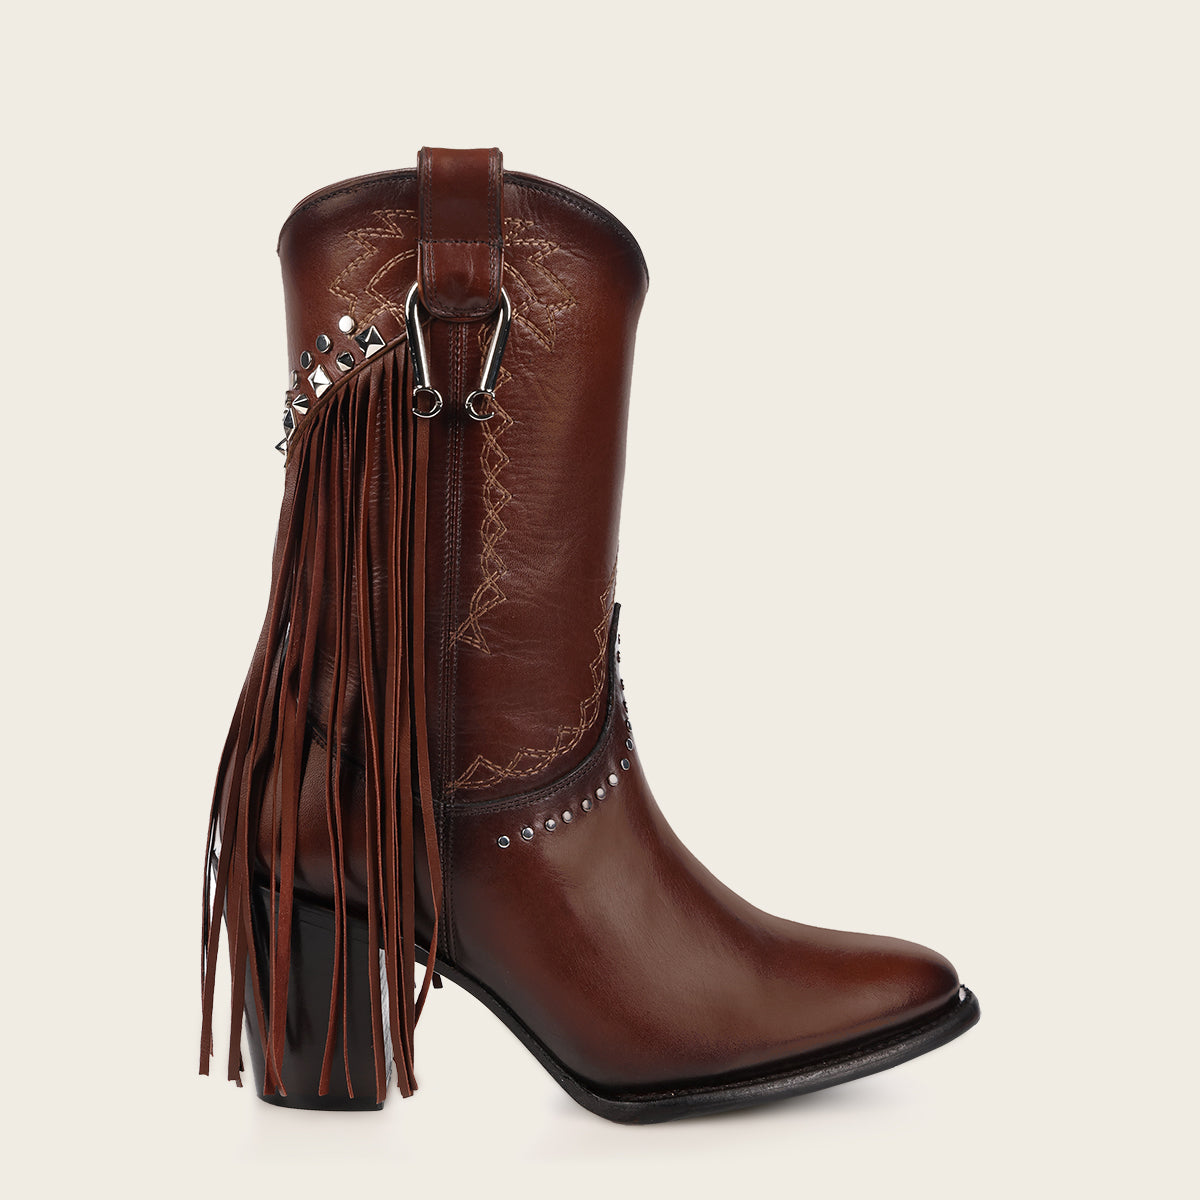 Handmade honey leather western style boot